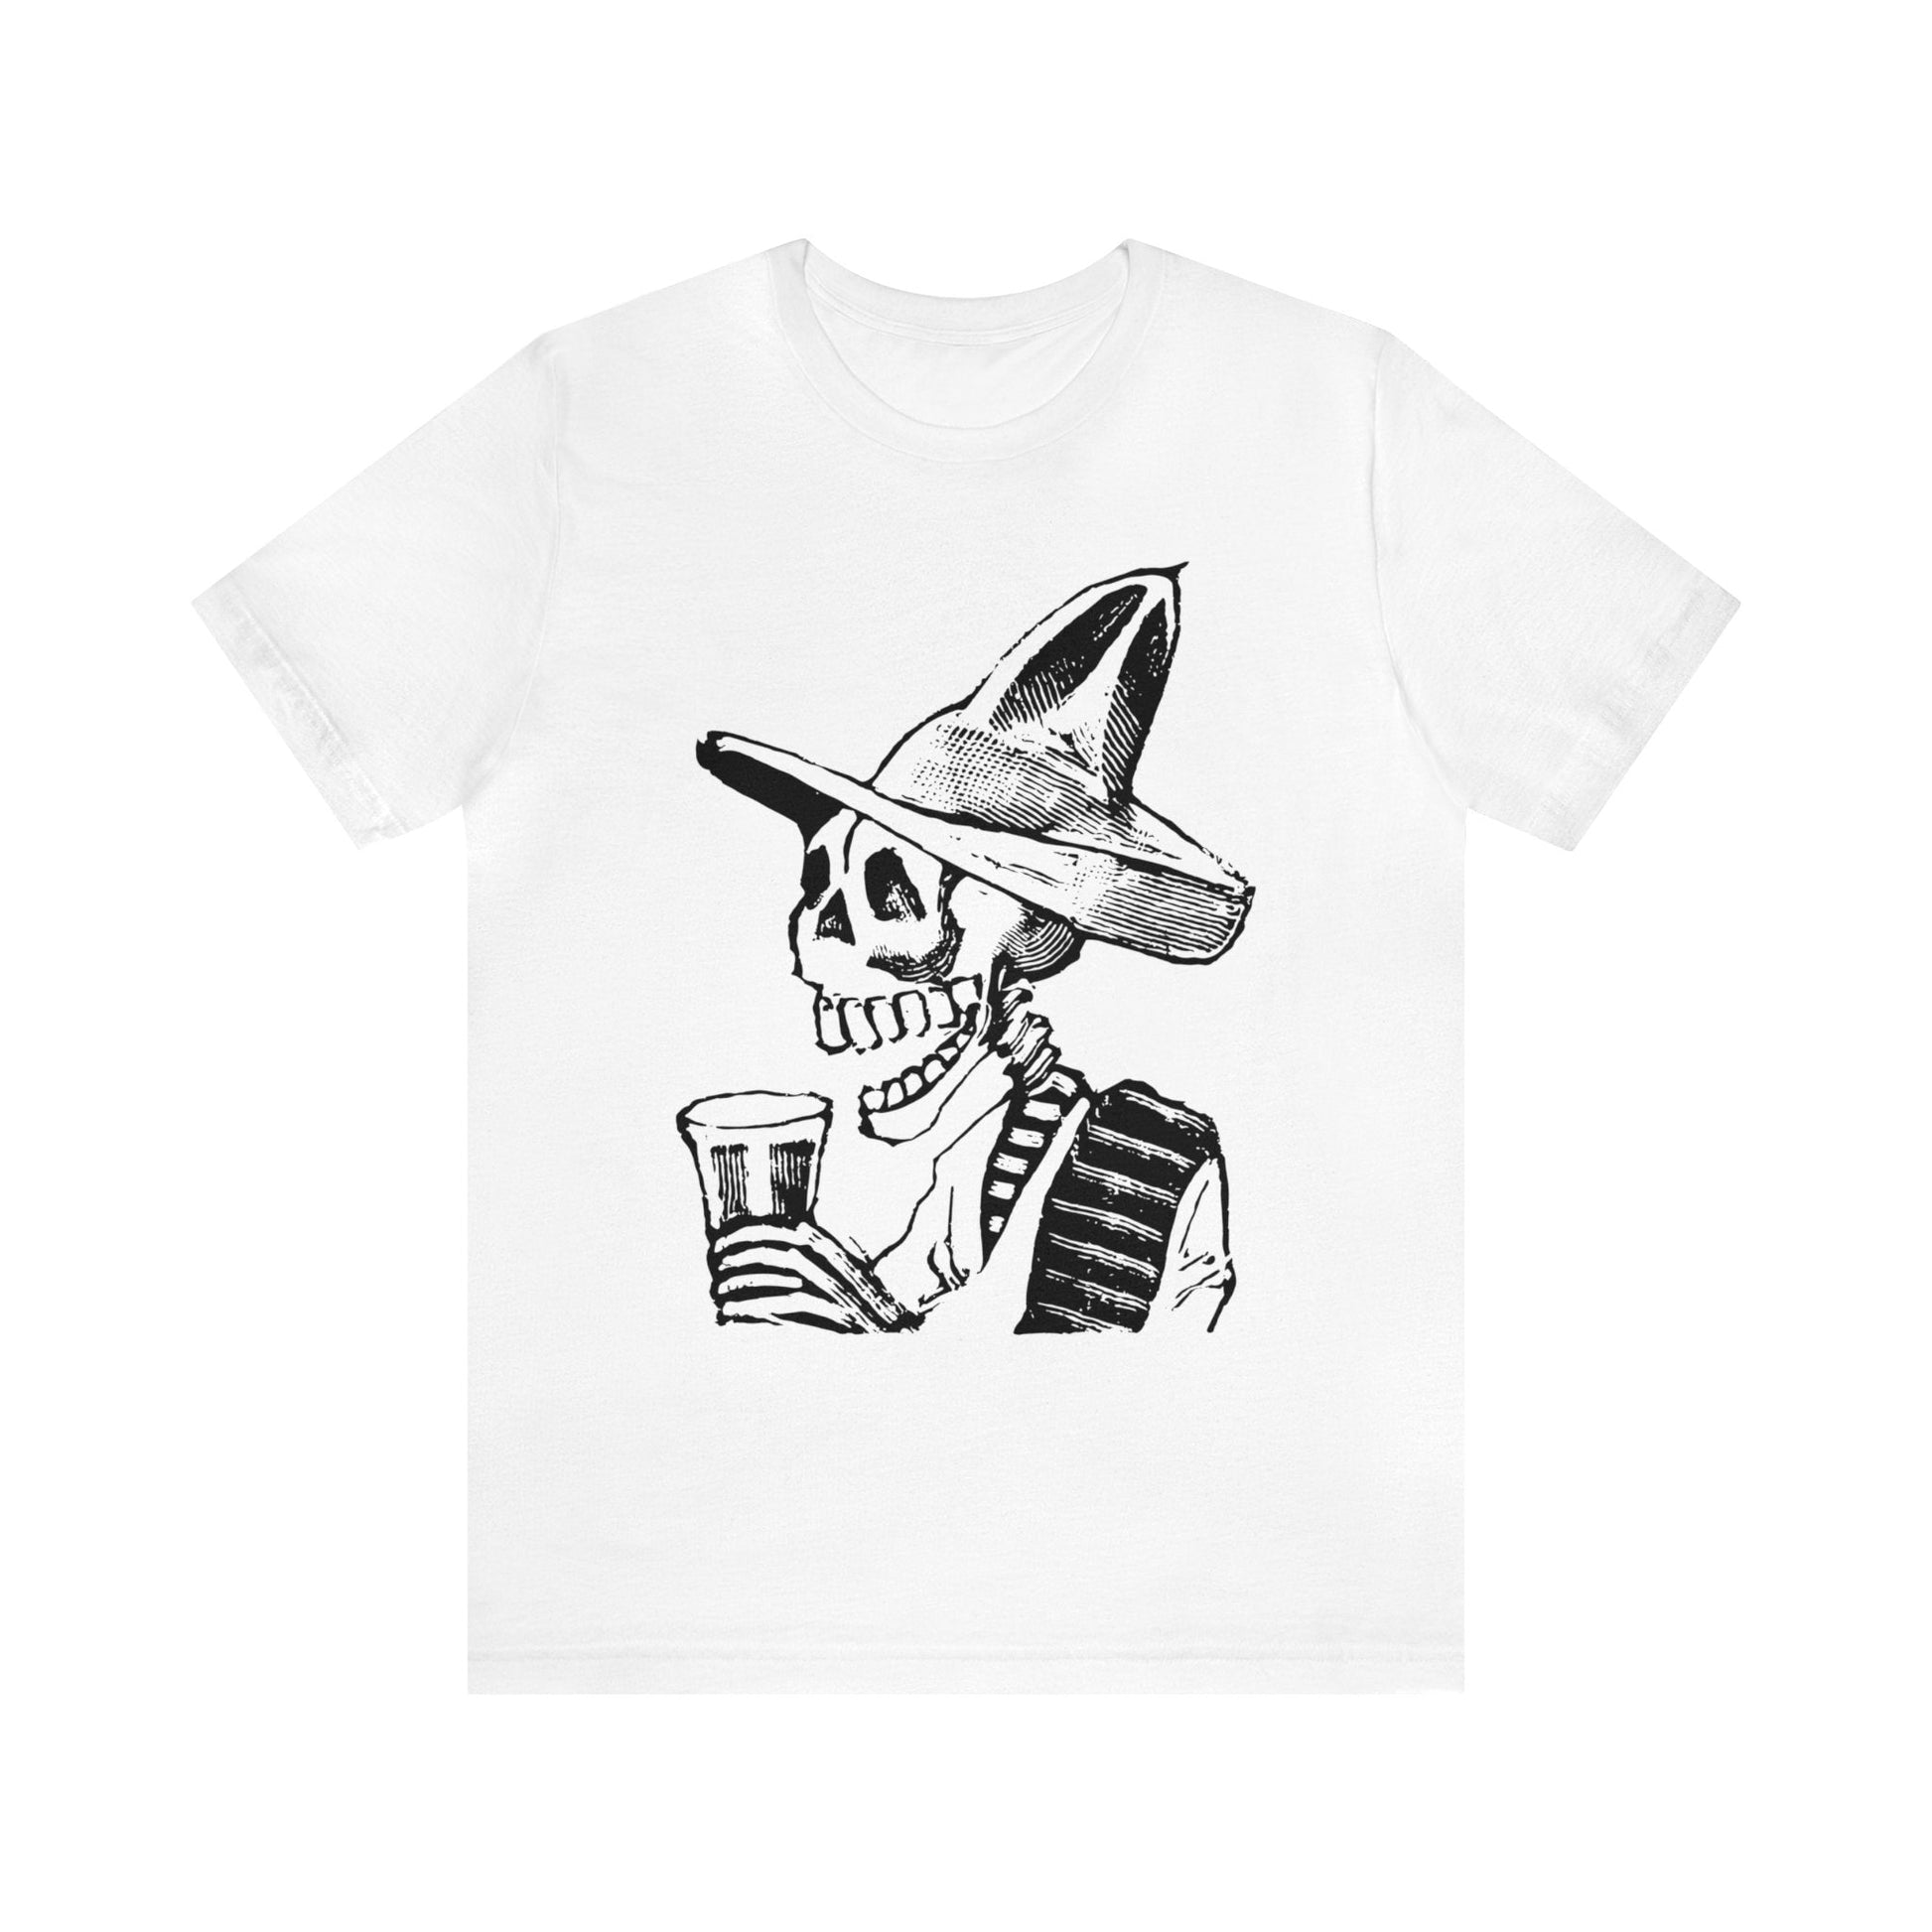 Drinking Skeleton - José Guadalupe Posada - Black Mass Apparel - T-Shirt